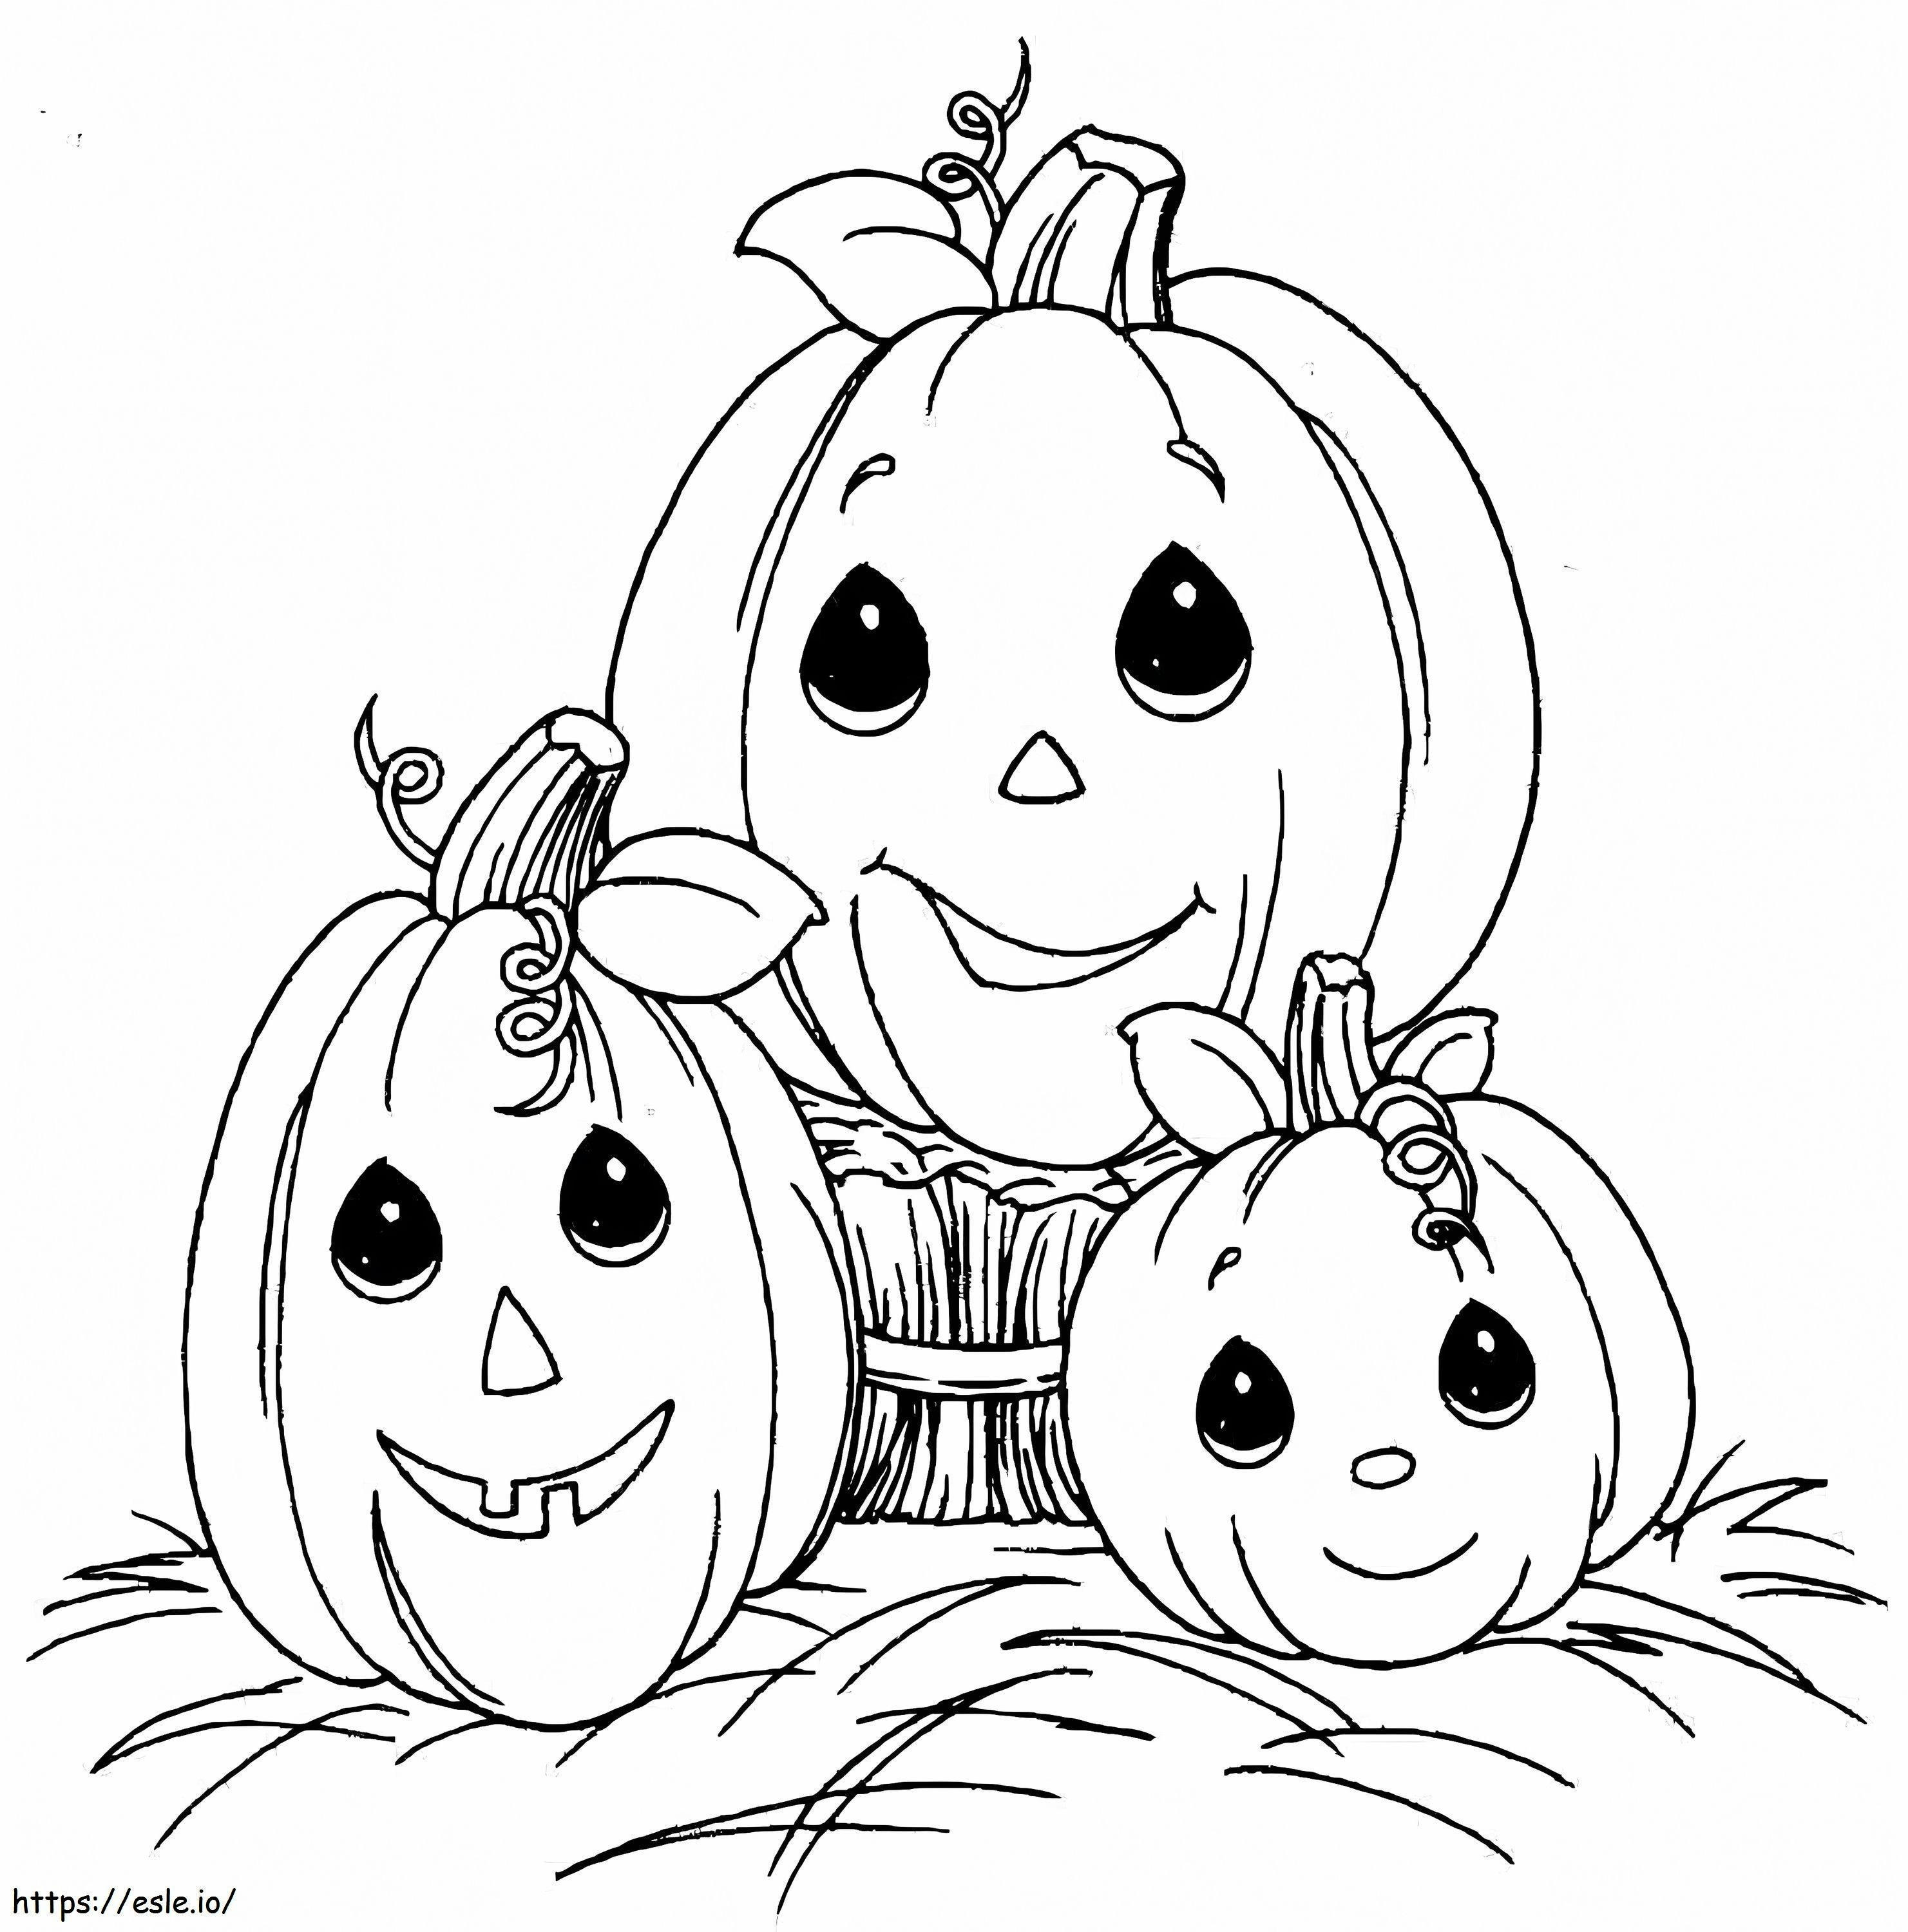 Smiling Three Pumpkins coloring page